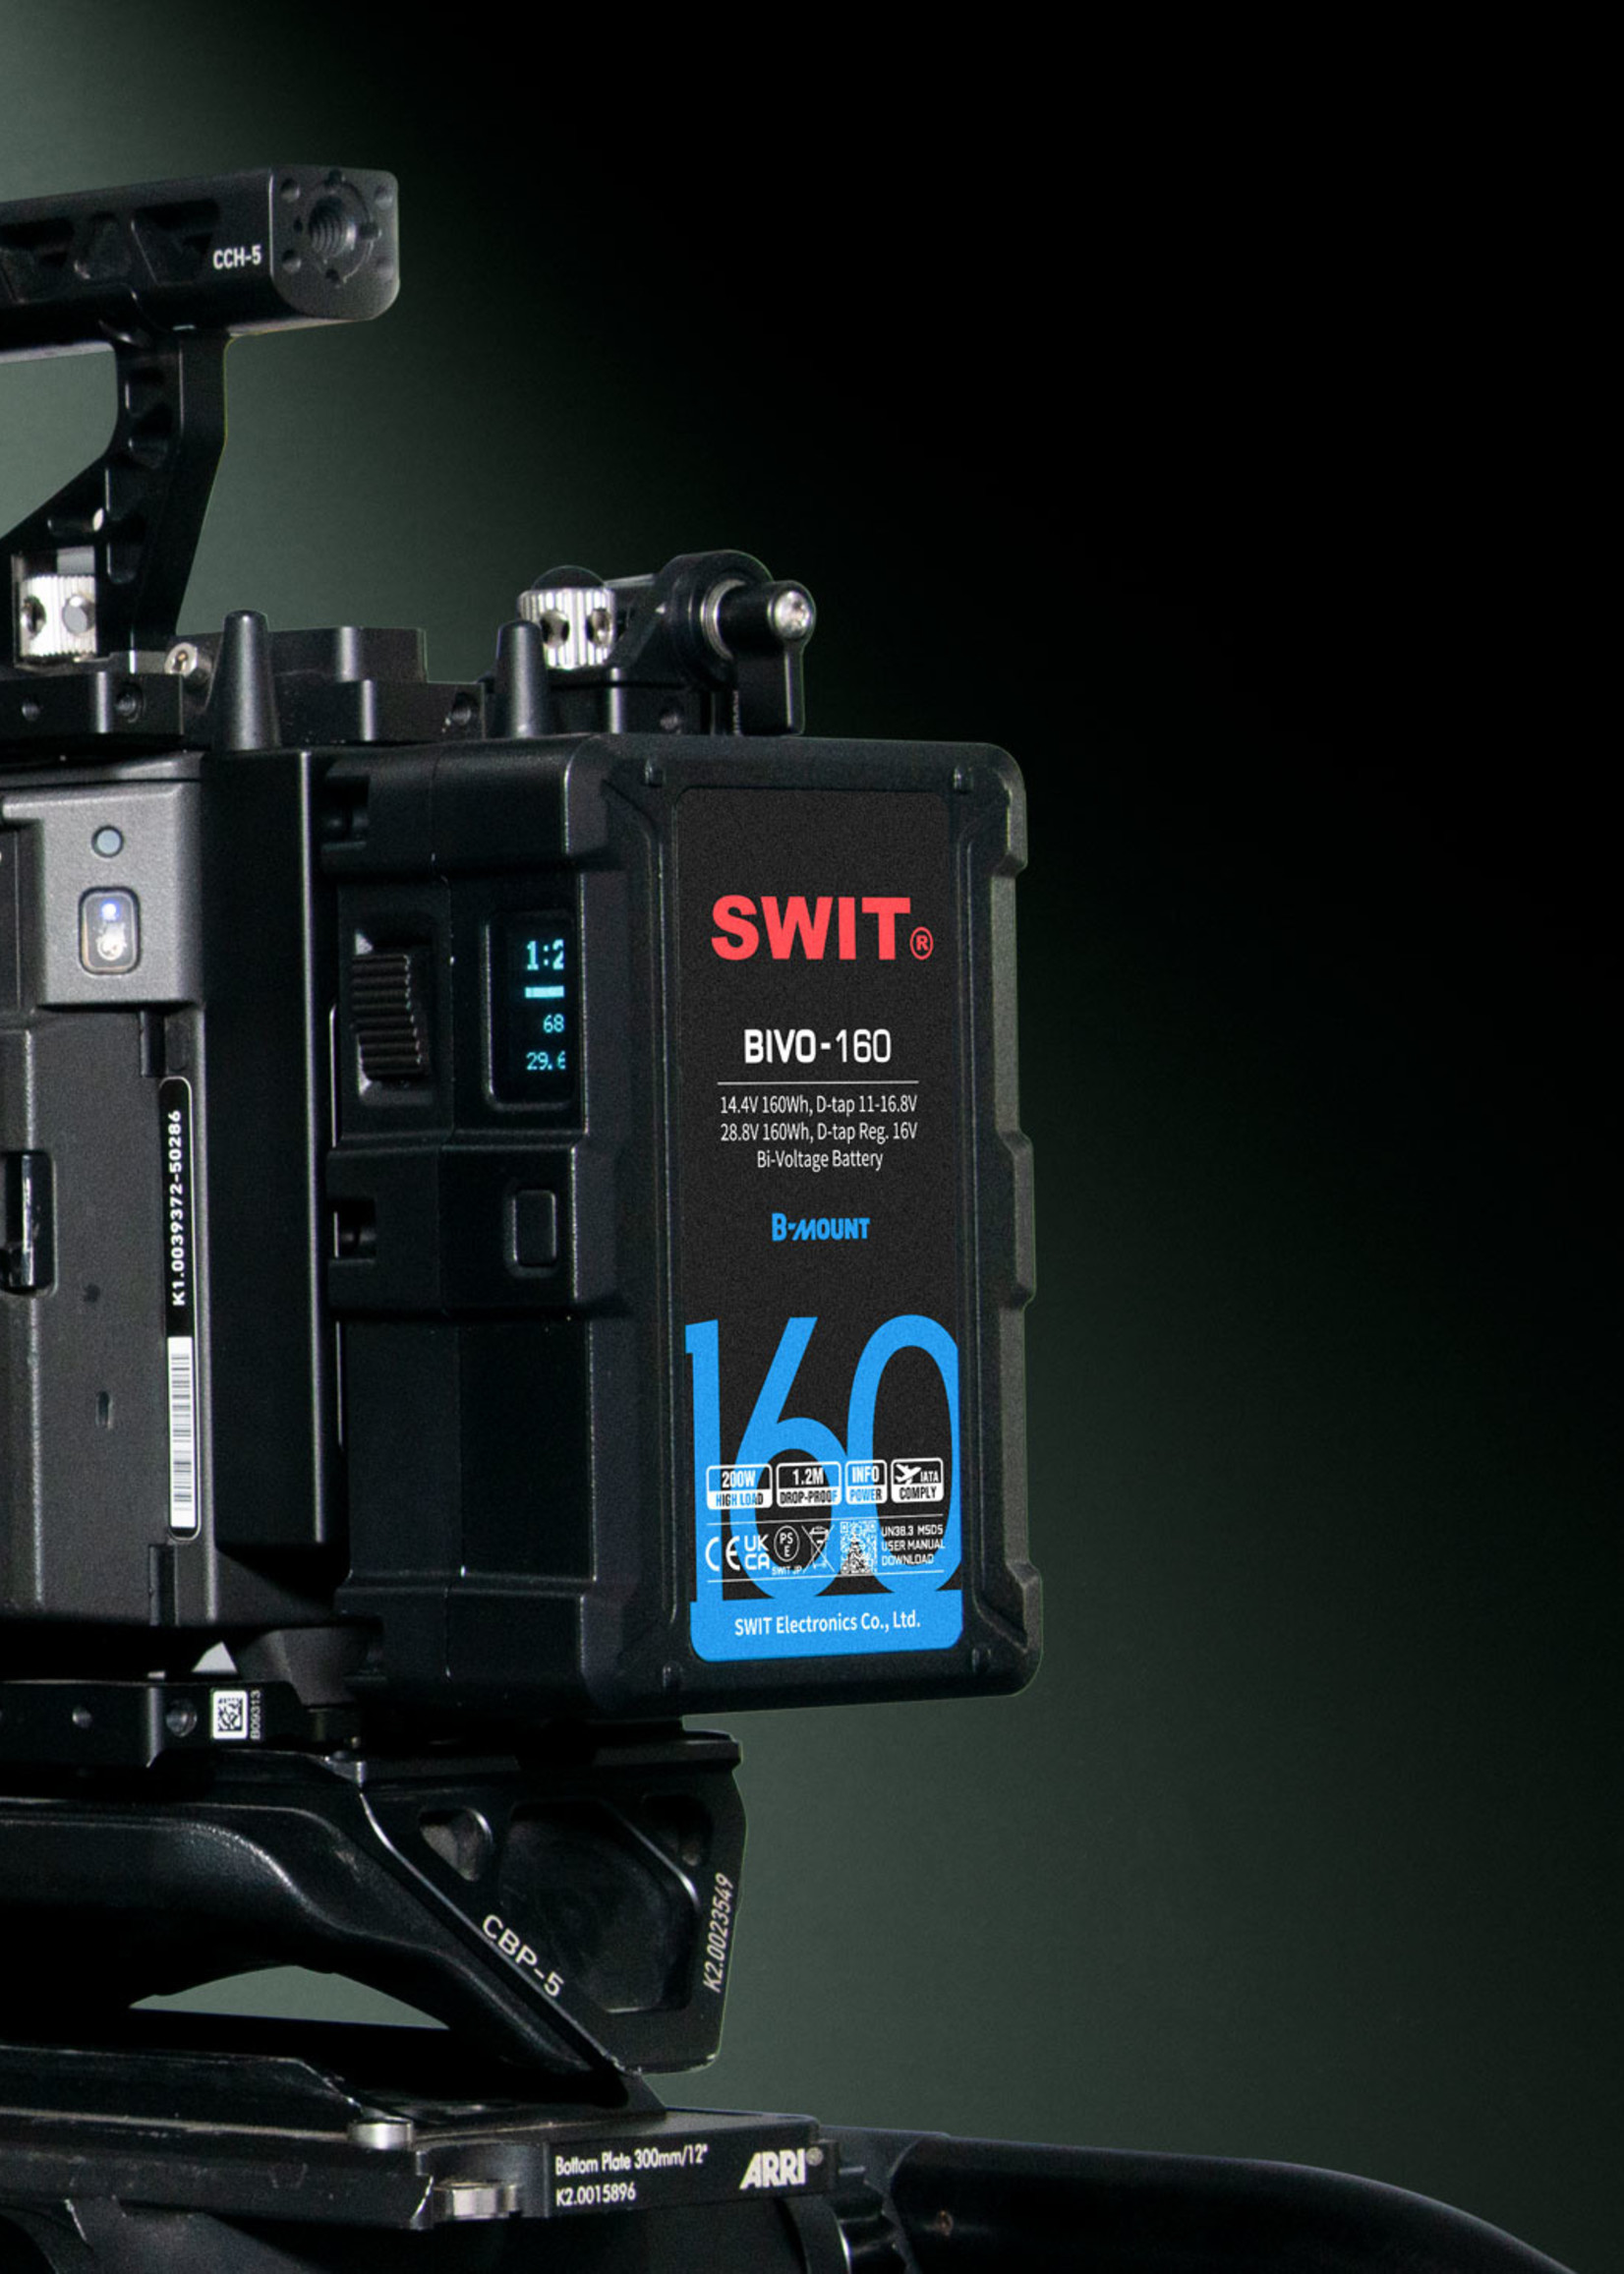 Swit BIVO-160 160Wh Bi-voltage B-mount Battery Pack